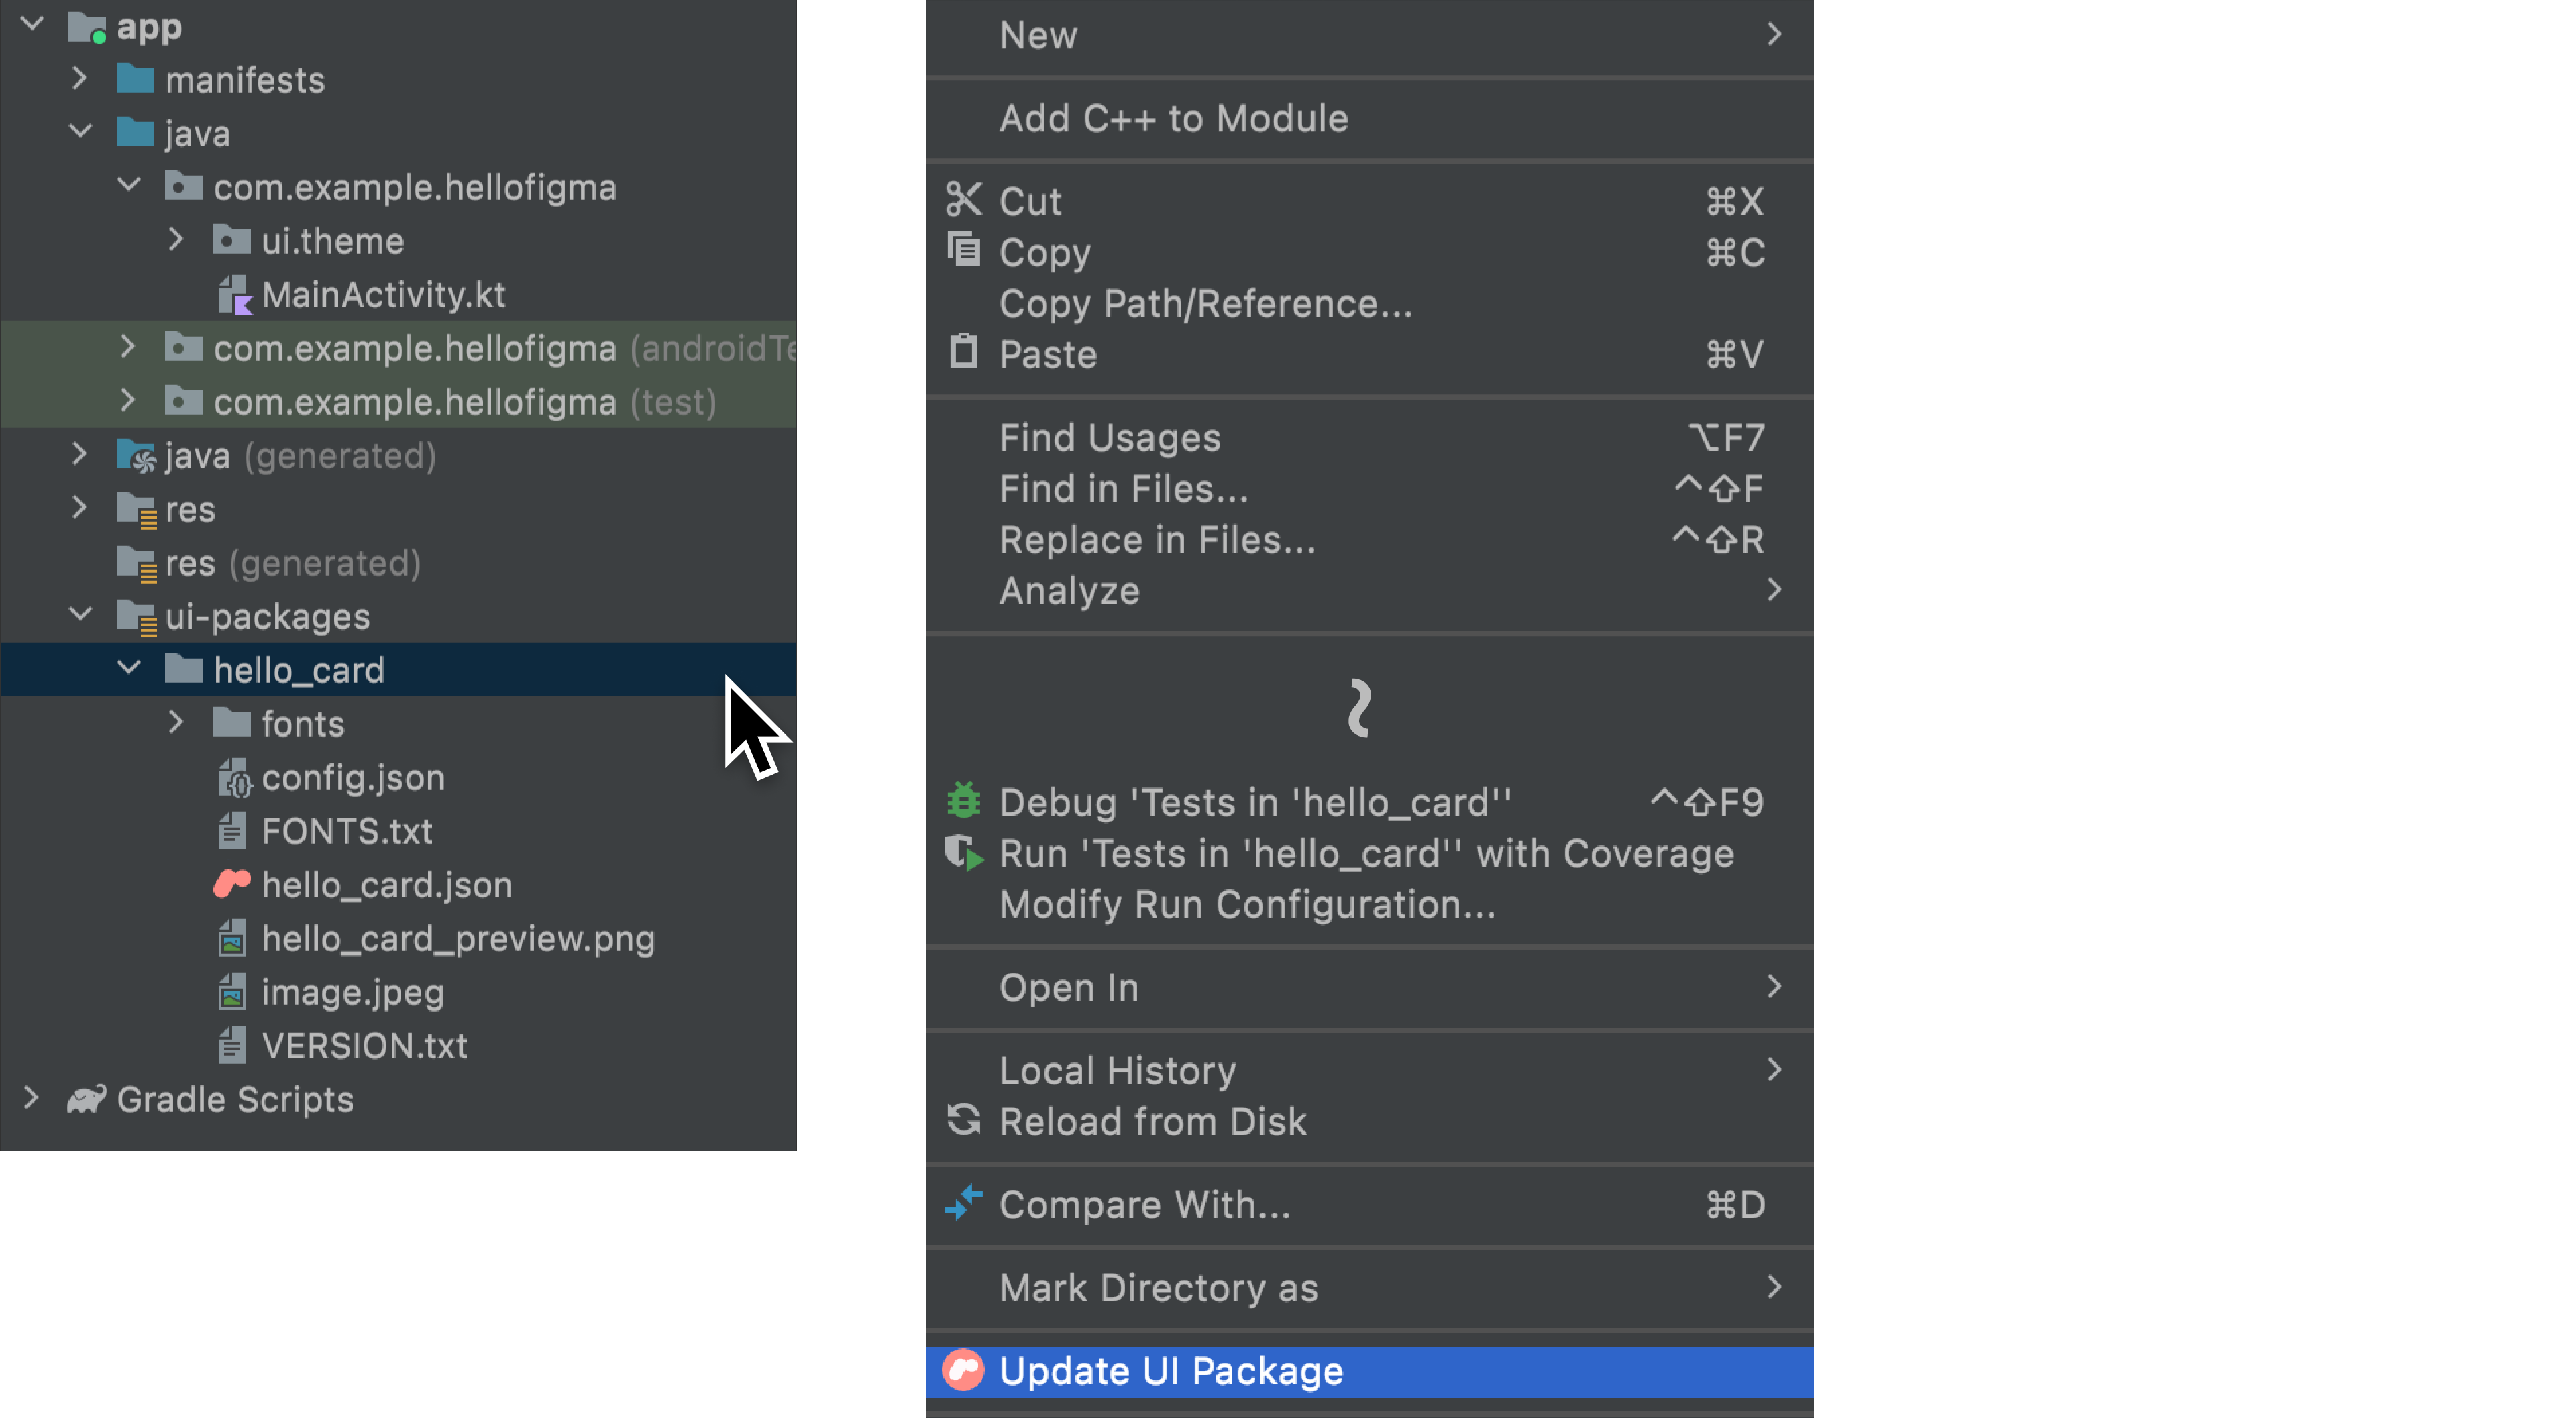 Opsi Update UI Package di menu konteks